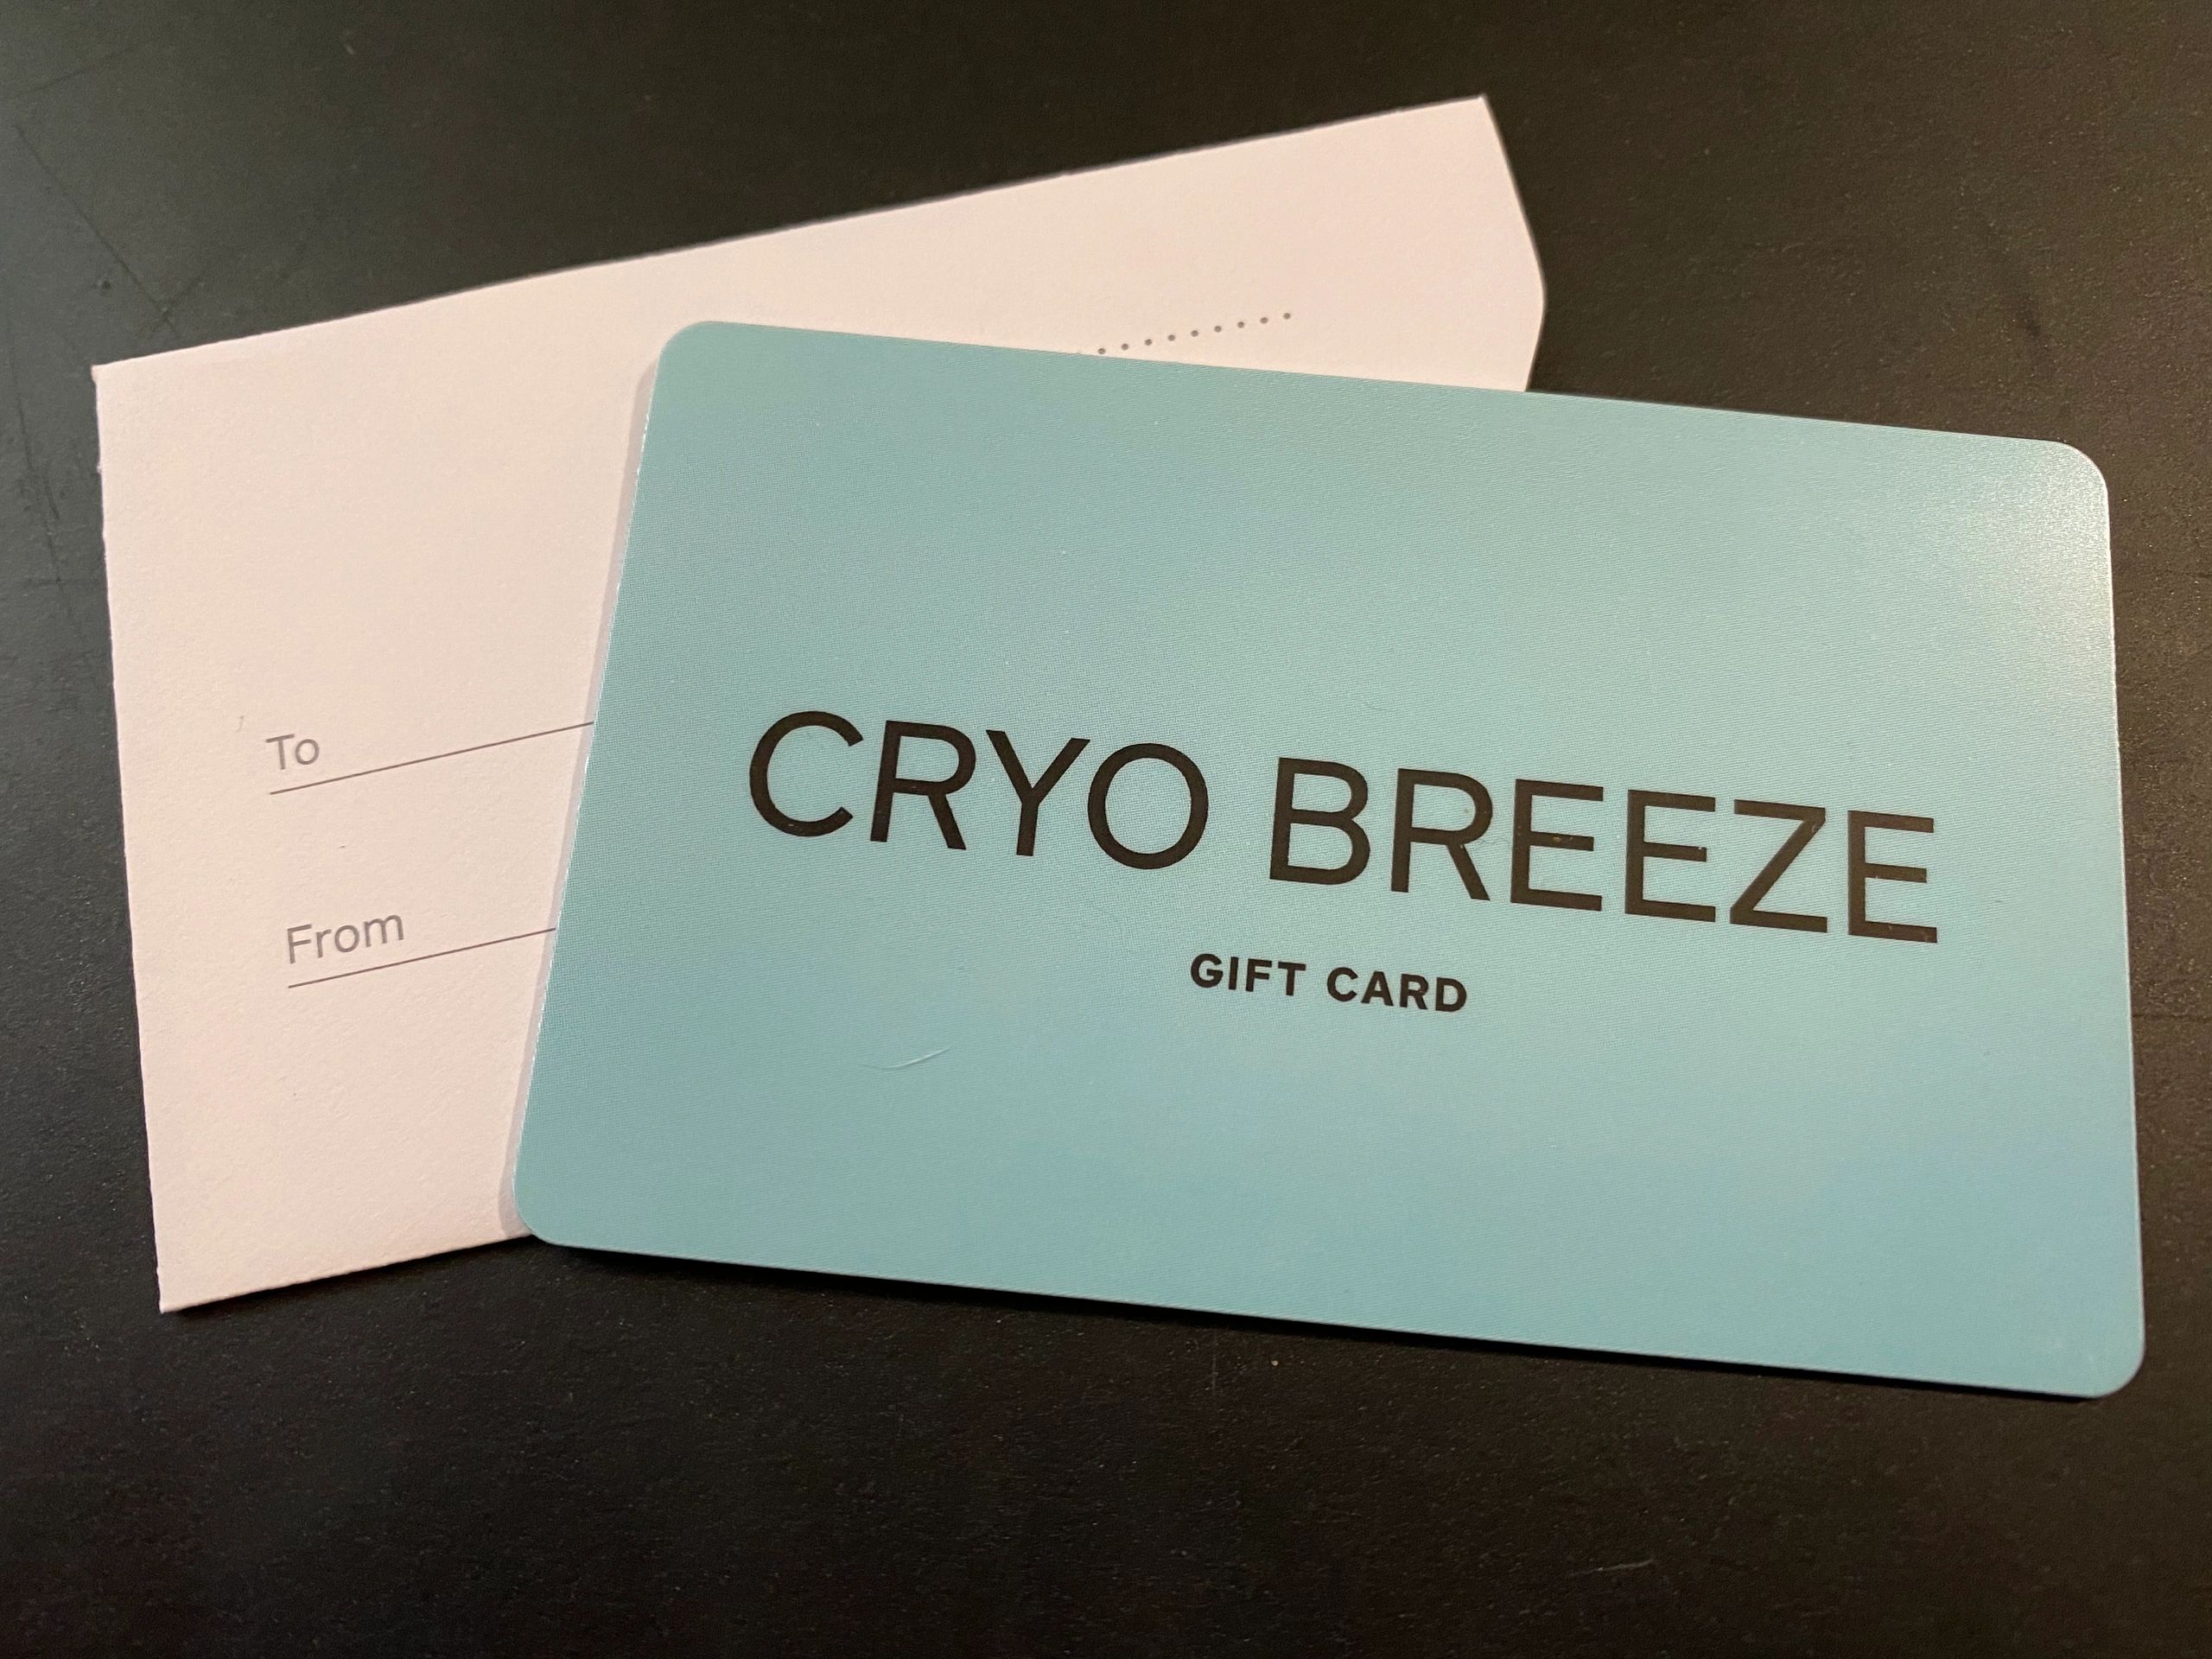 Cryo Breeze Brainerd, MN 
Gift Card